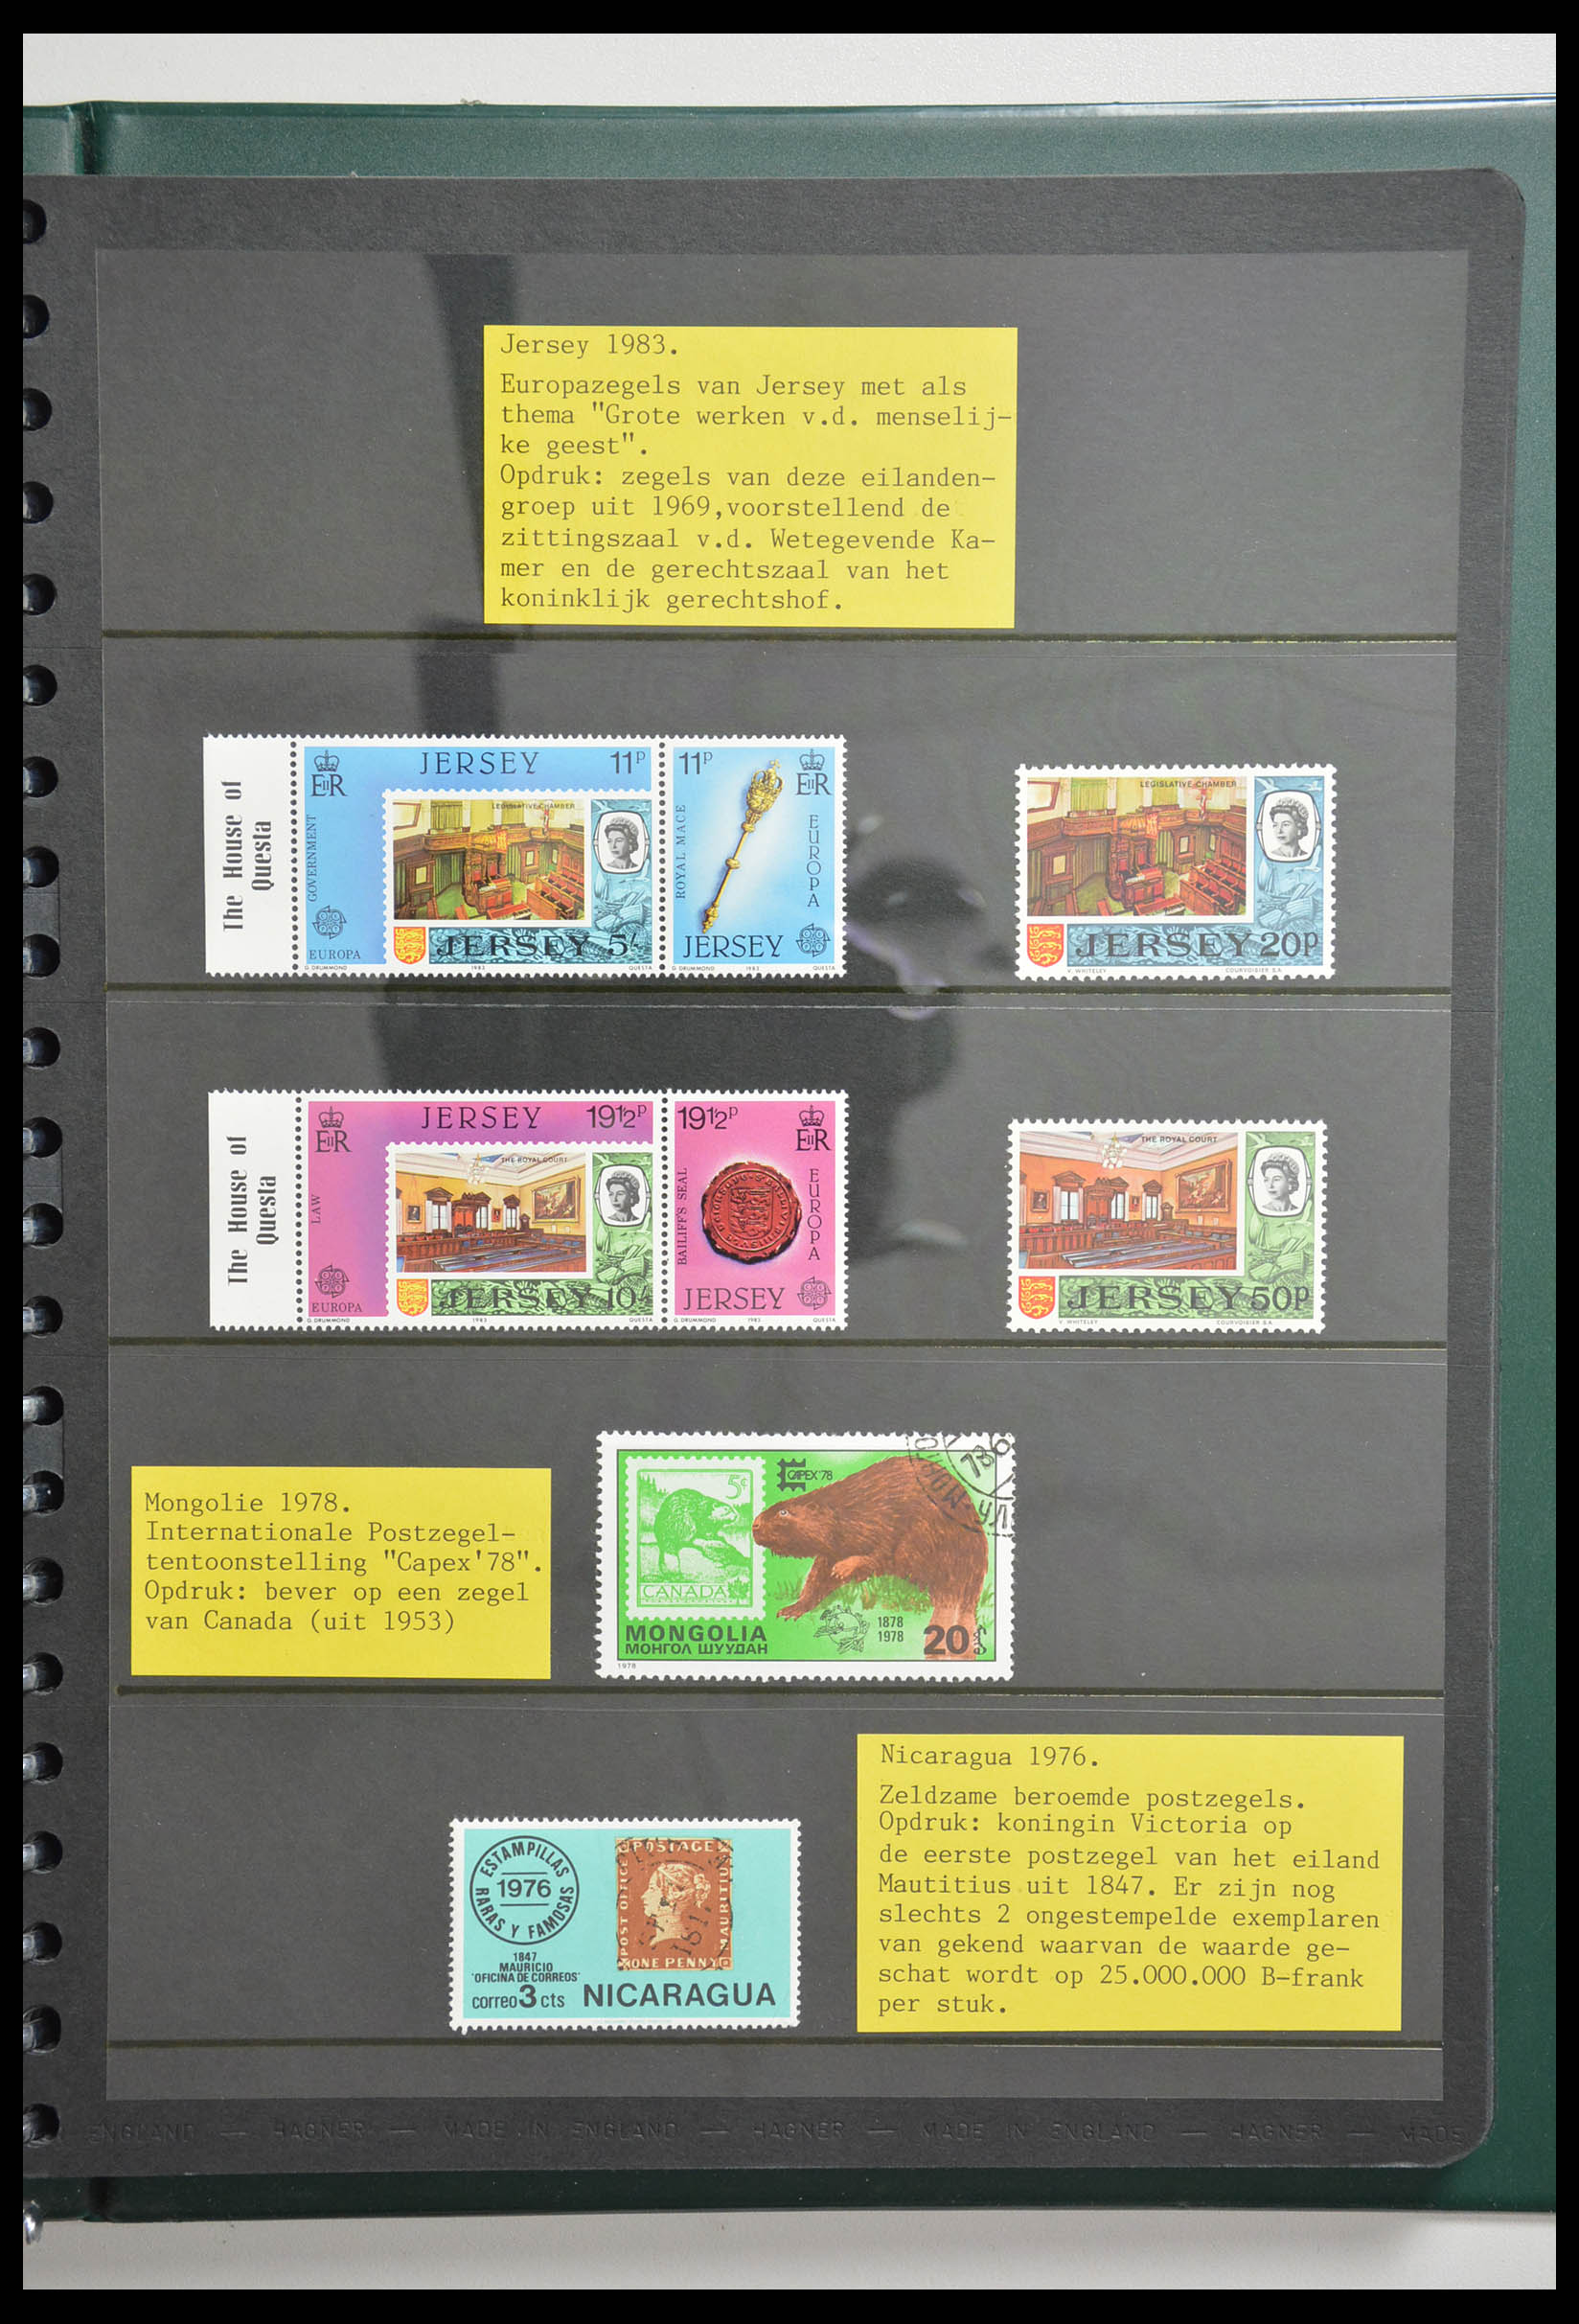 28337 108 - 28337 Postzegel op postzegel 1840-2001.